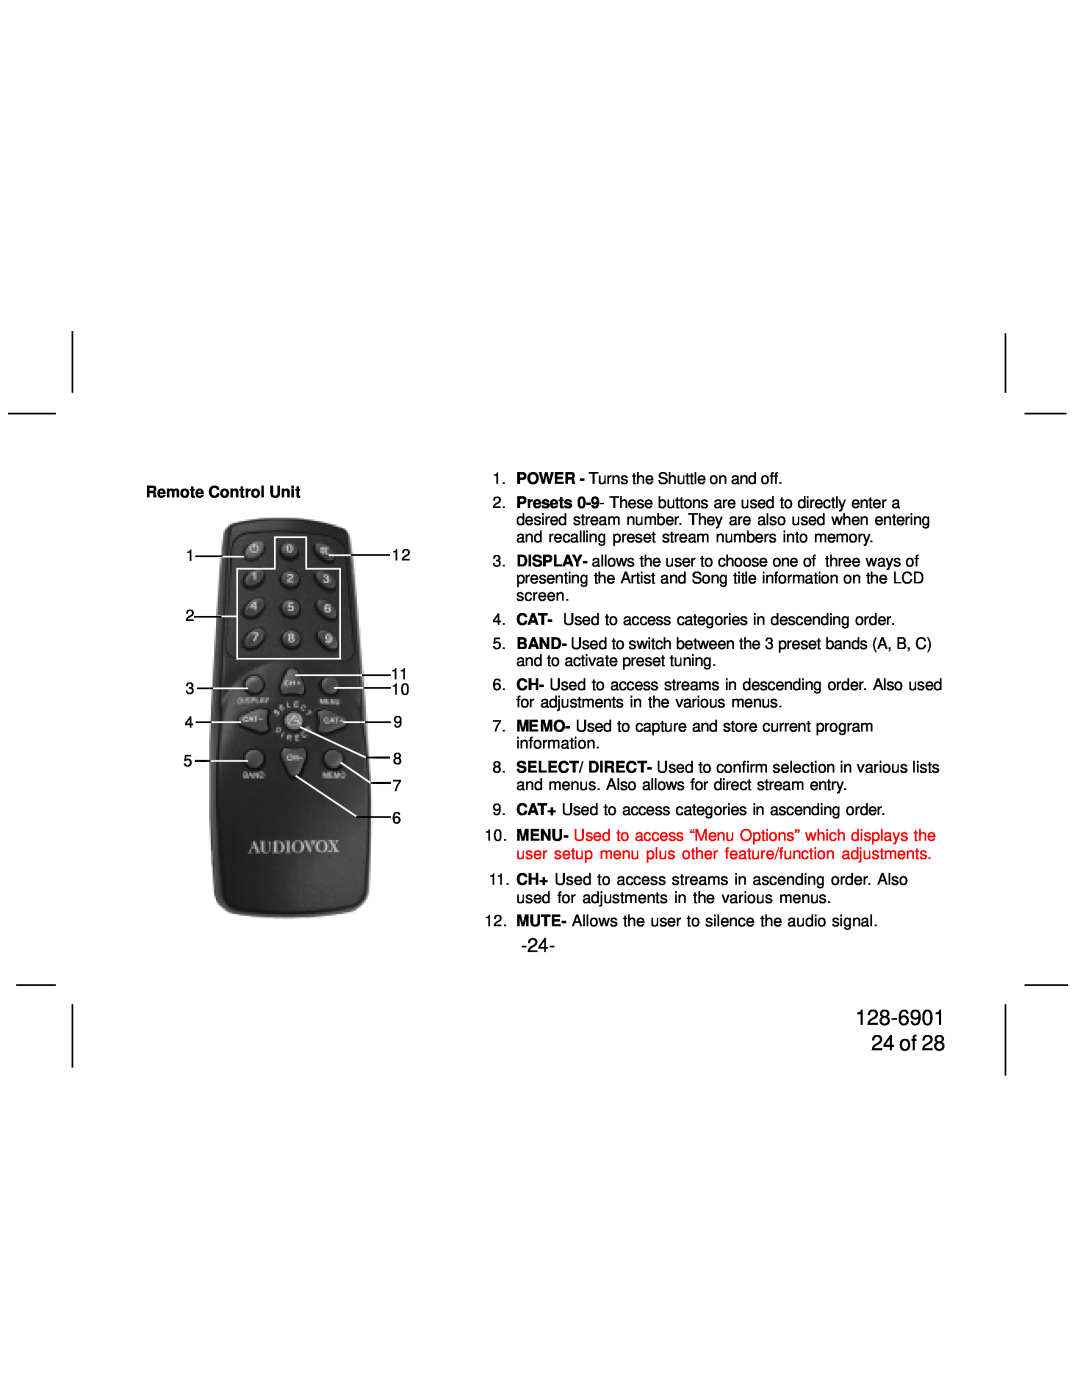 Audiovox SIR-PNP2 manual 128-6901 24 of, Remote Control Unit 